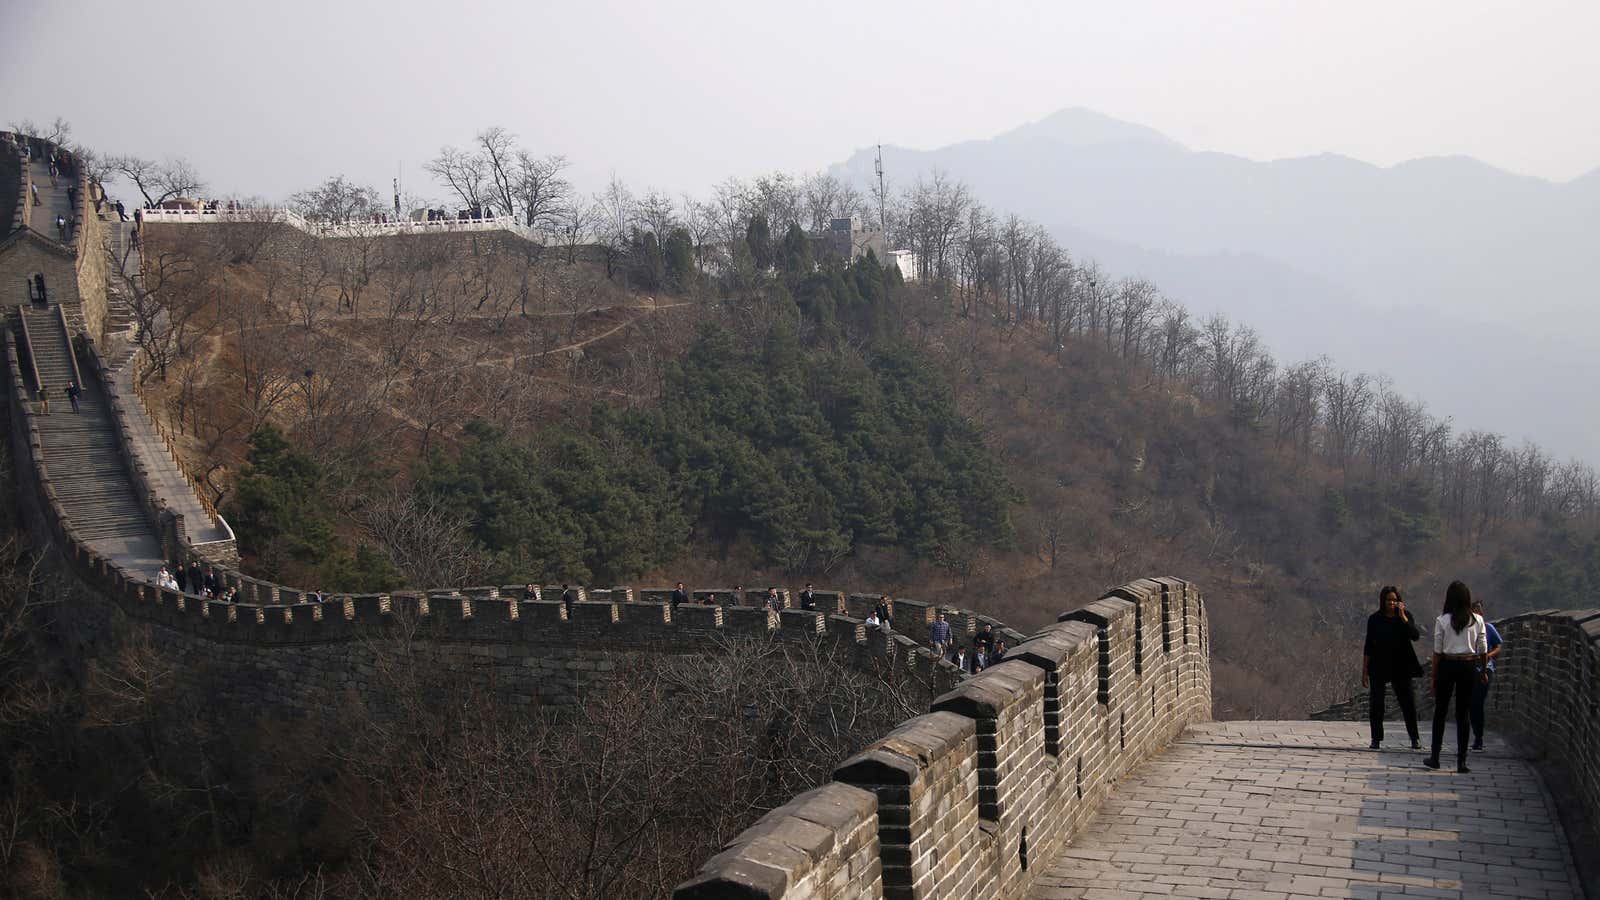 China has experience erecting walls.